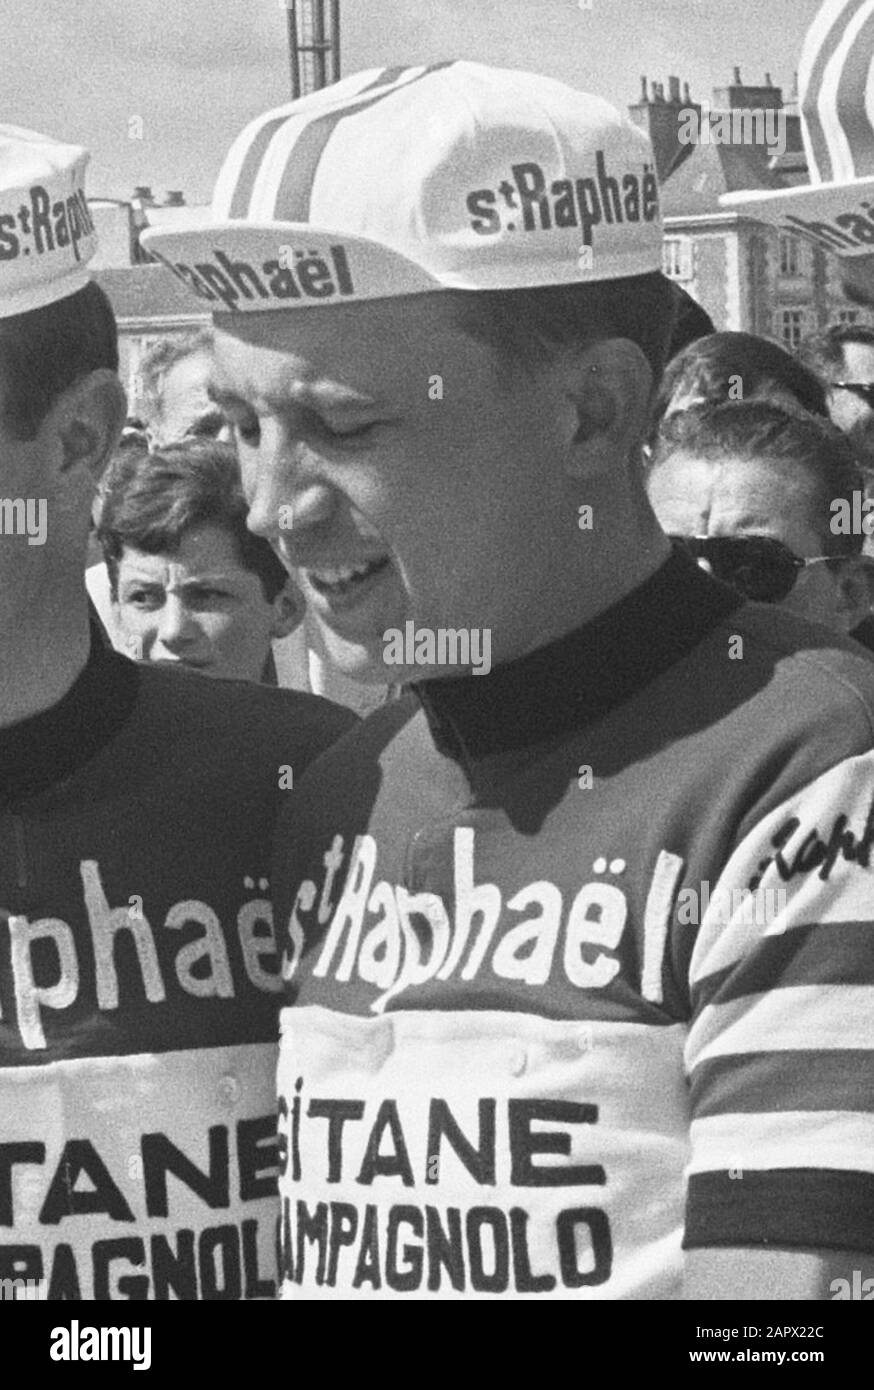 The St. Raphael-Gitanes team: Pierre Everaert Date: 24 June 1964 Stock Photo